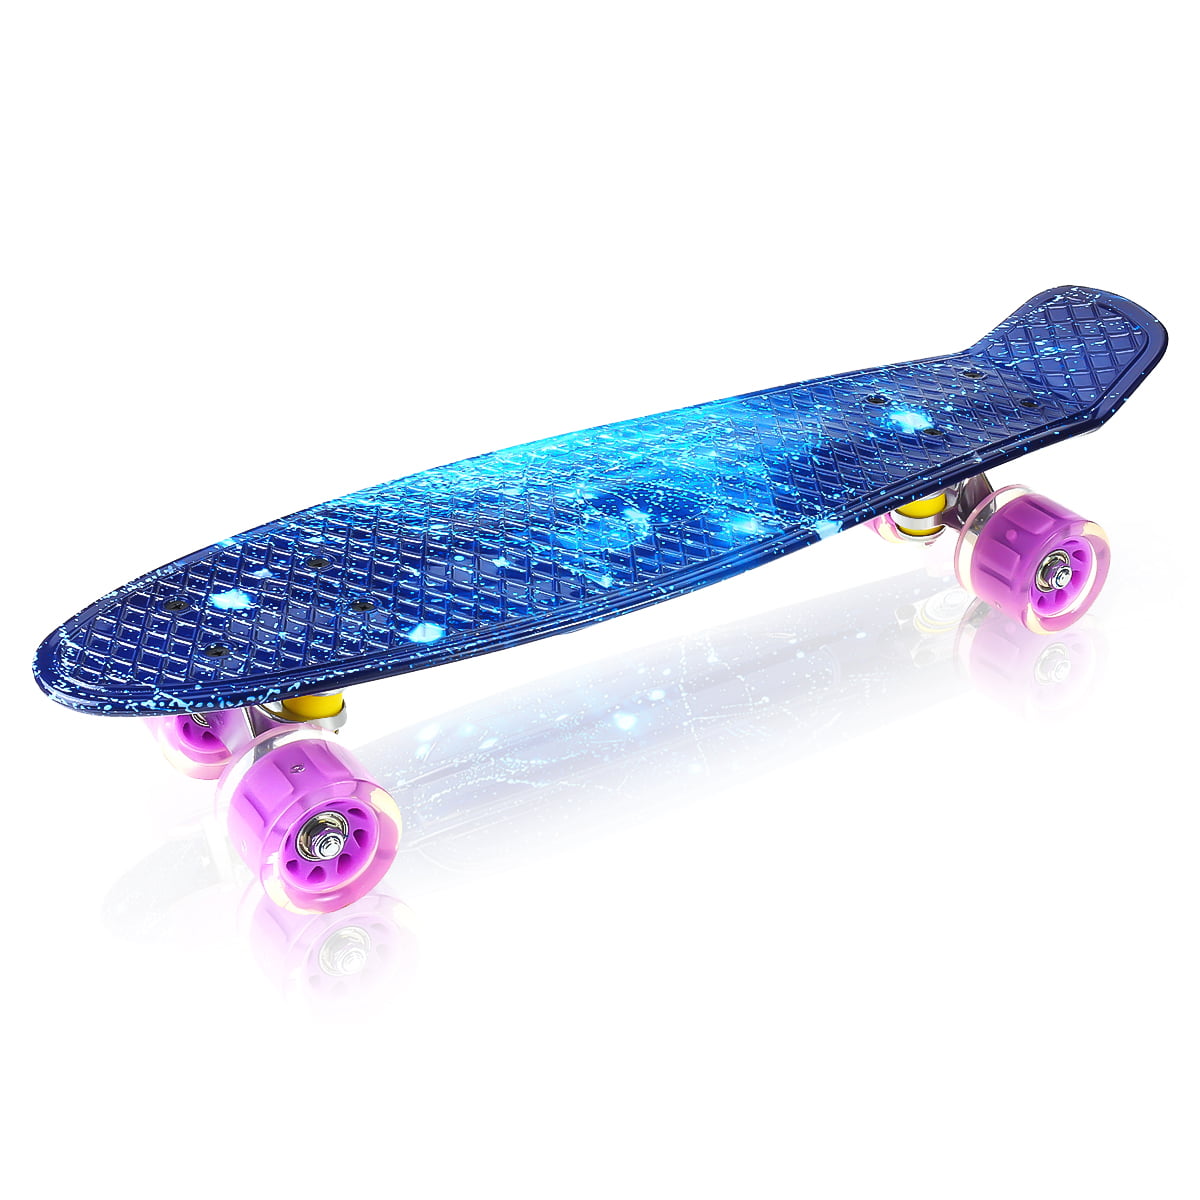 22" Complete Skateboard Classic Skater Board Plastics For Kids Beginners Gif T9 